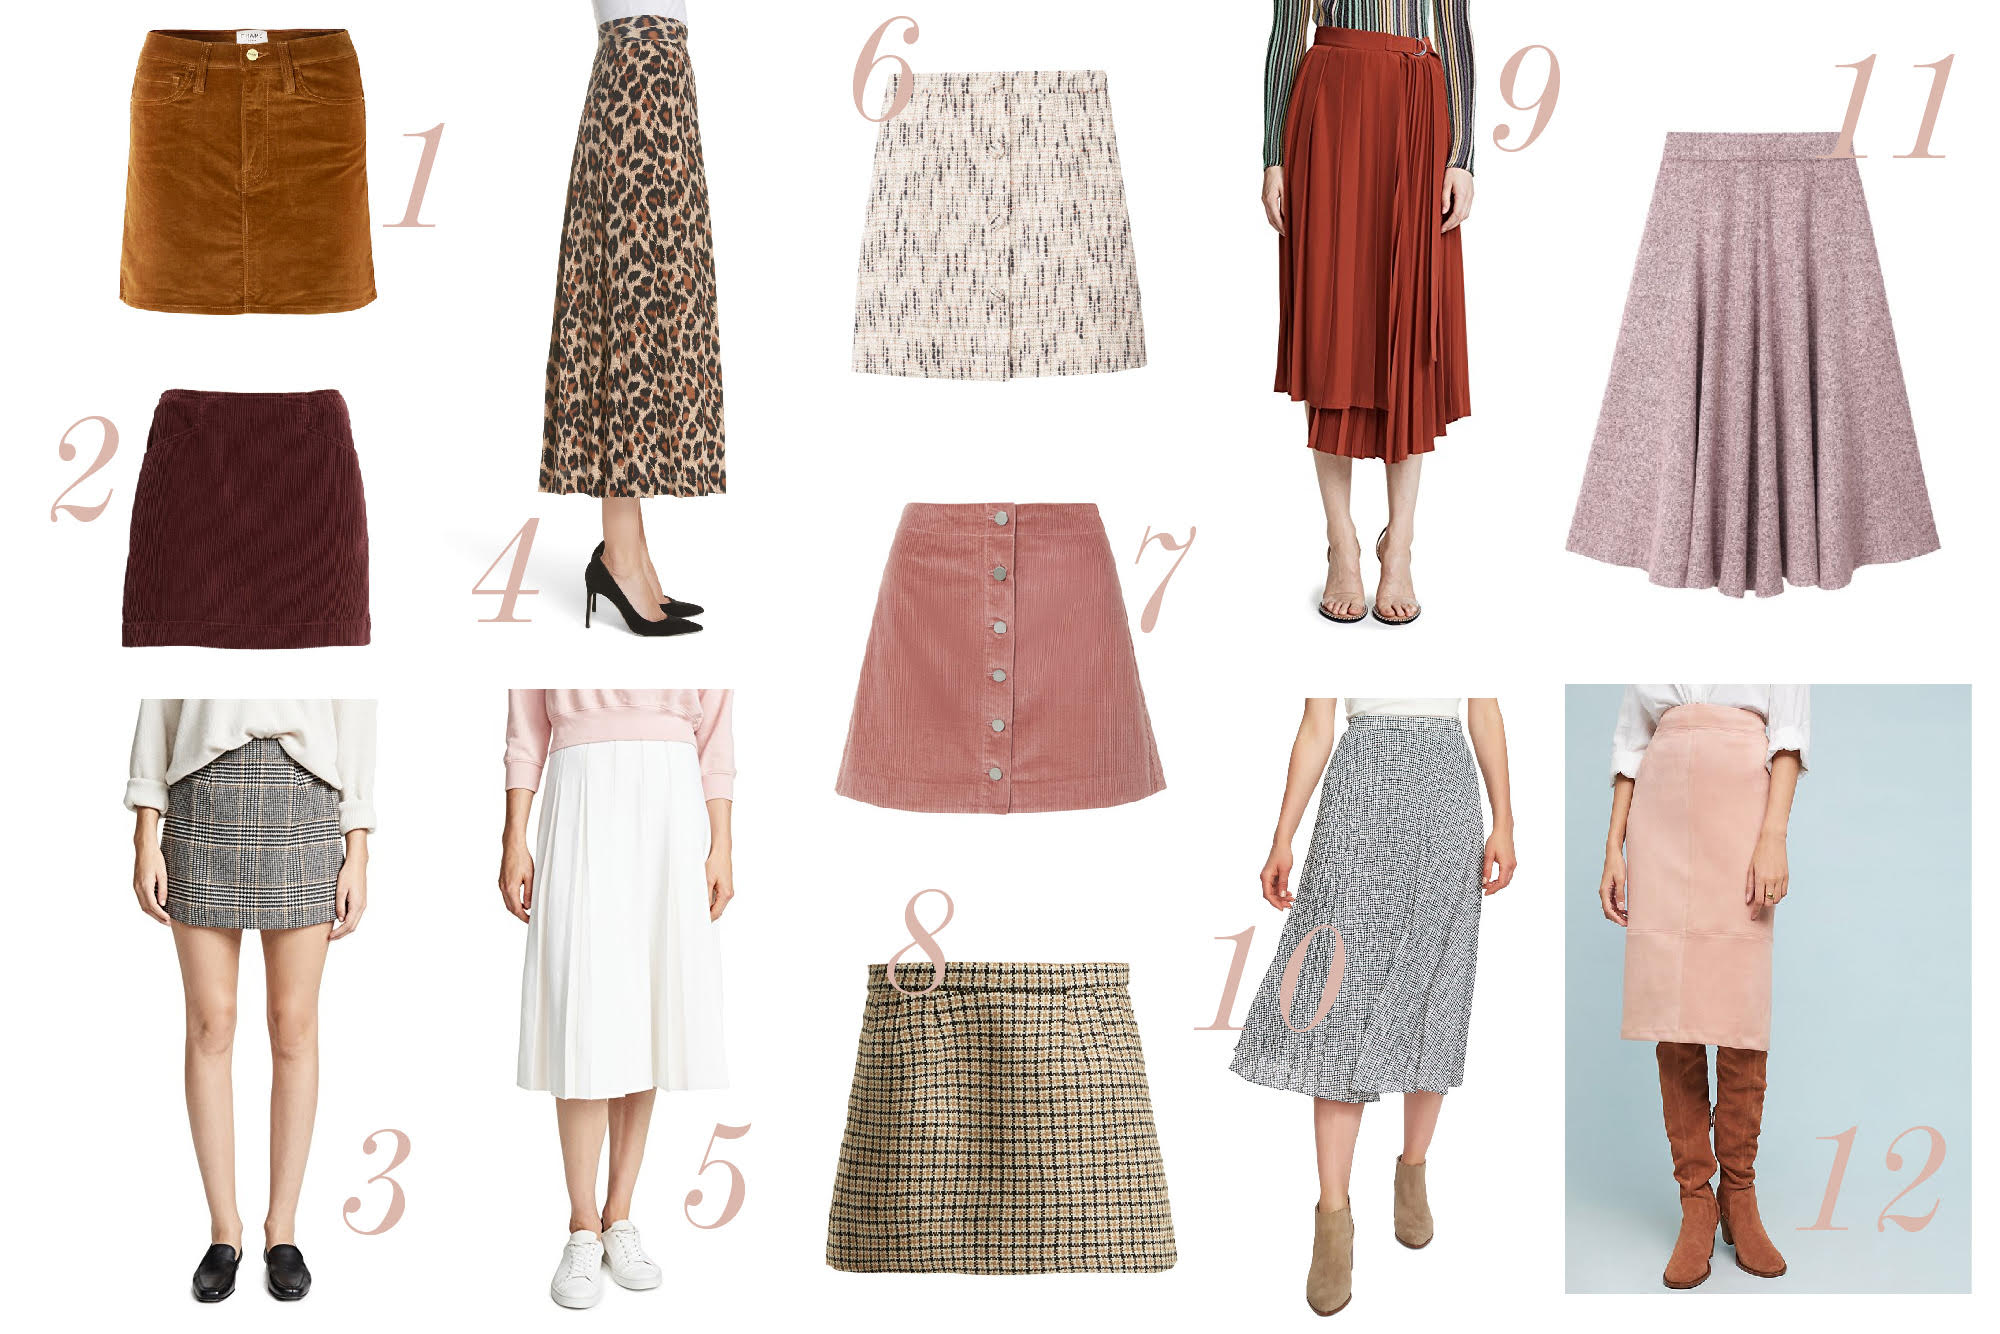 12 Skirts To Style For The Season - Julia Berolzheimer